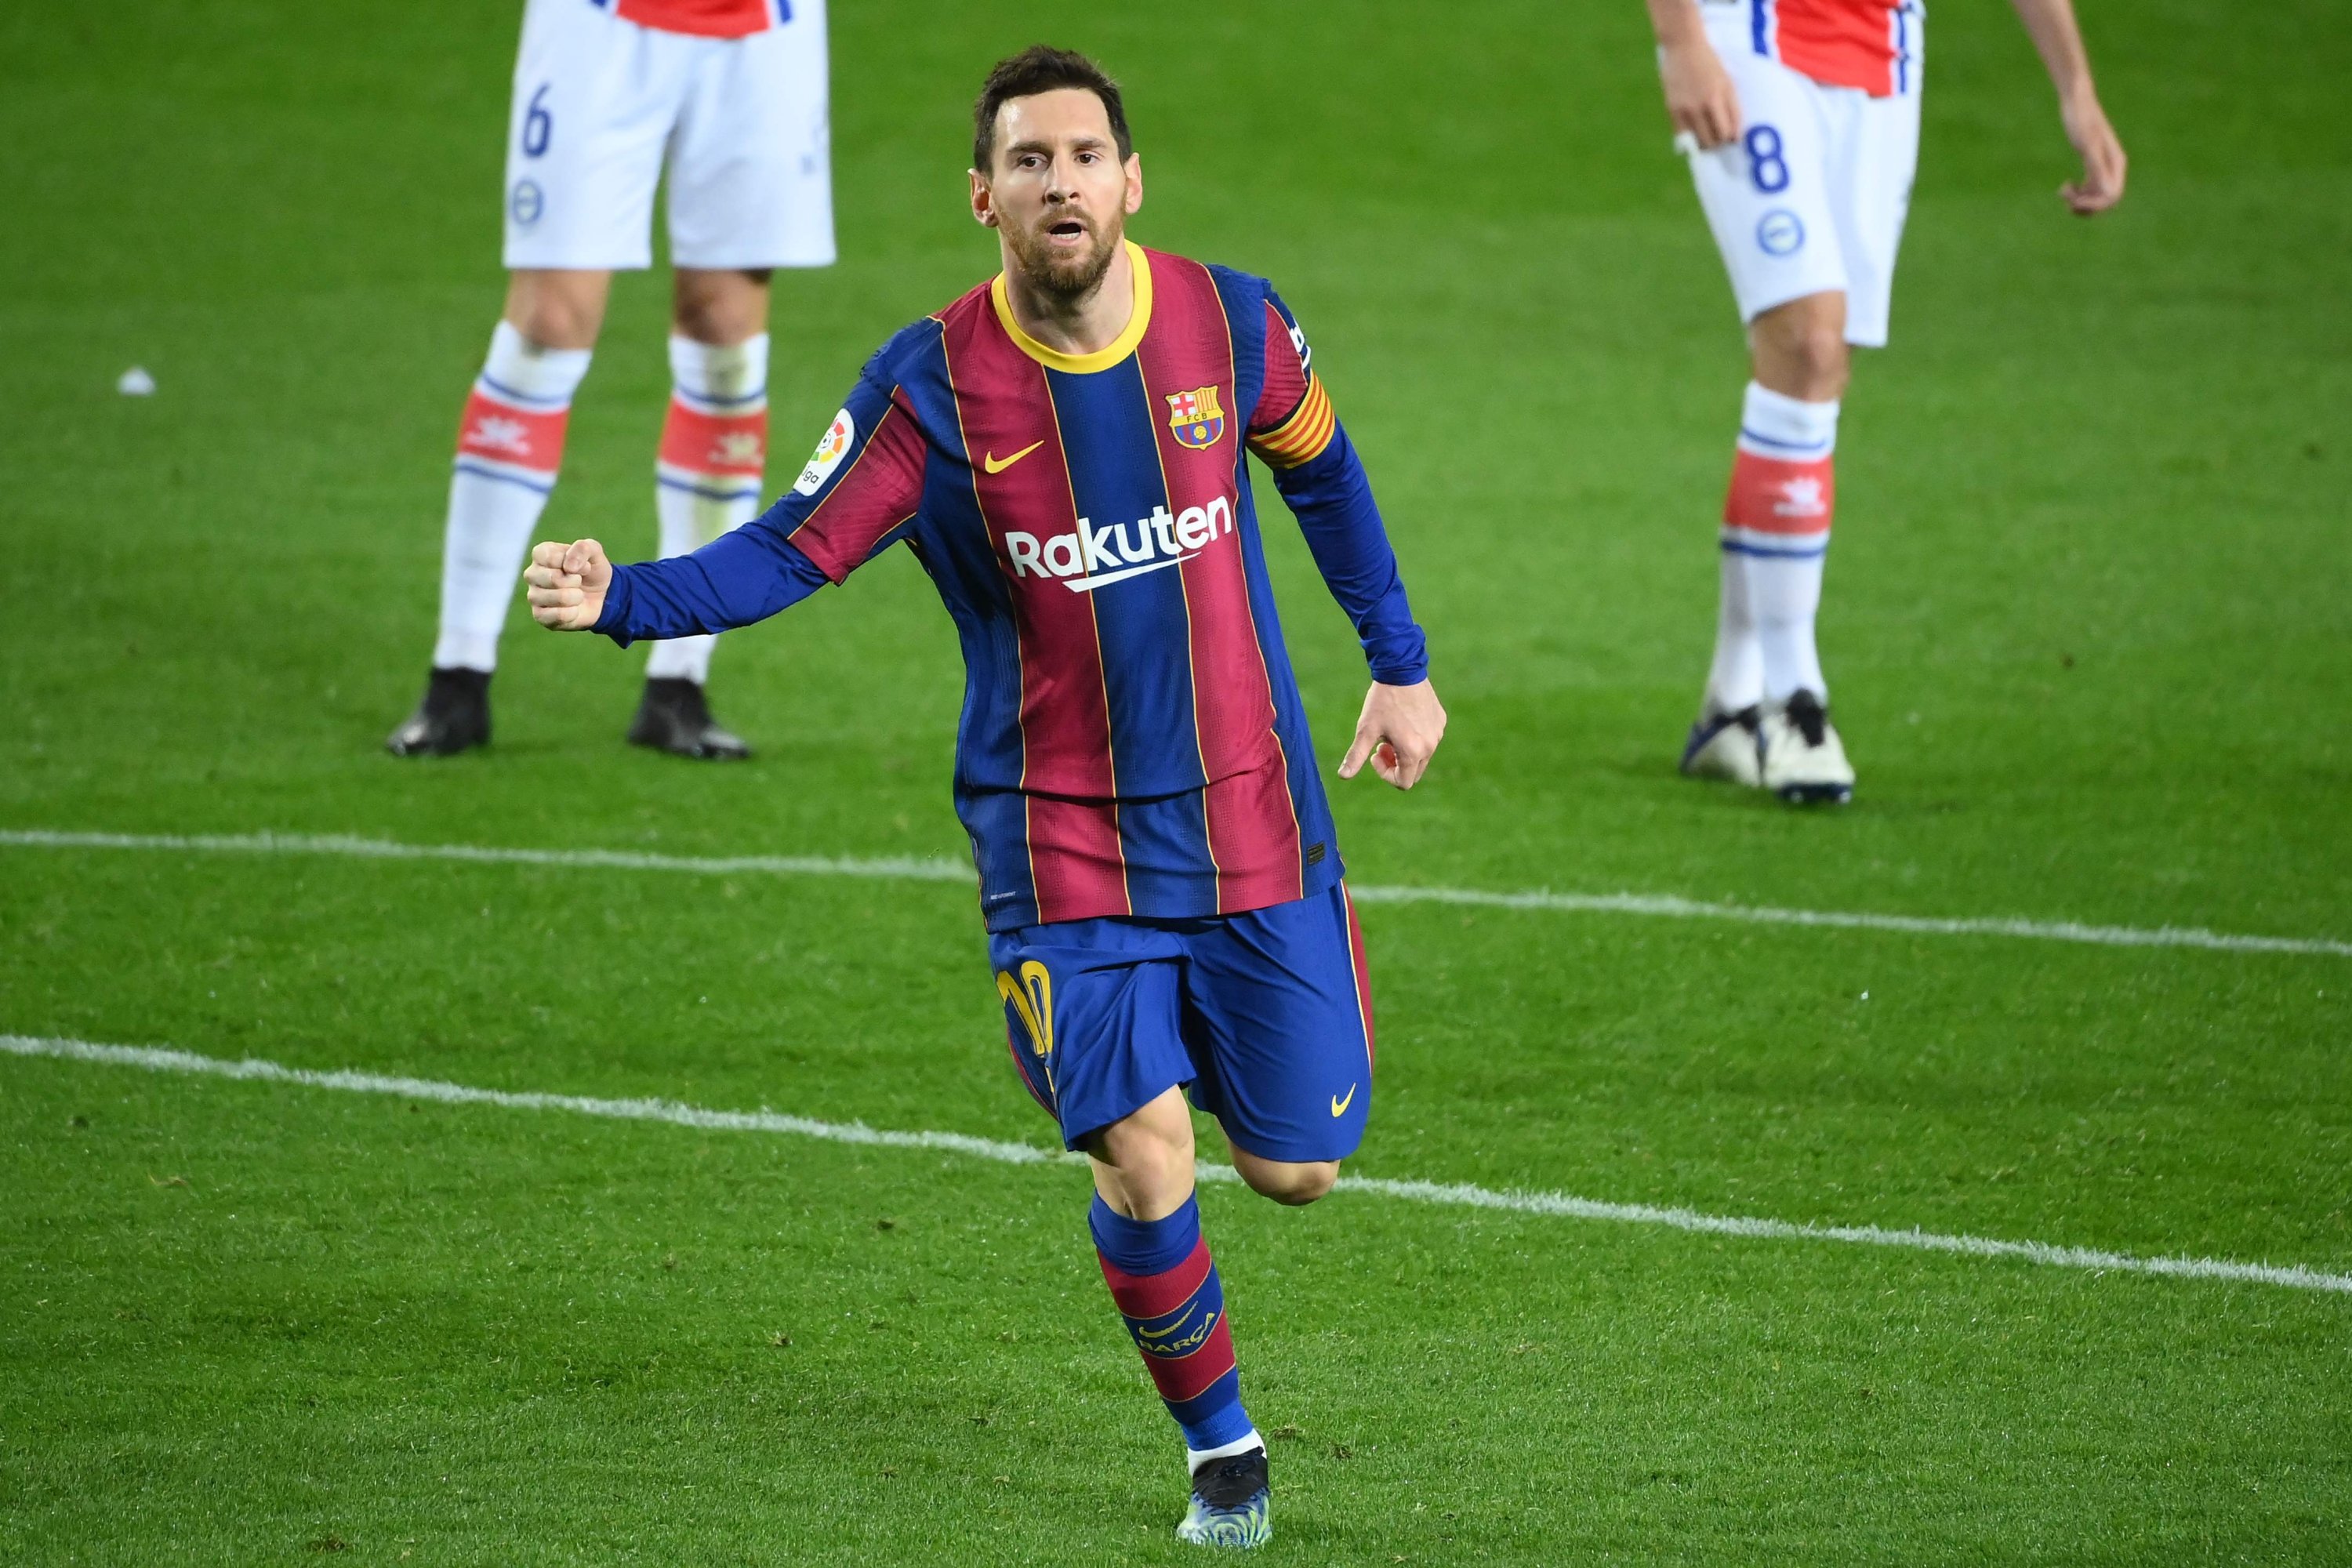 Barcelona's Lionel Messi celebrates scoring a goal against Alaves at the Camp Nou, Barcelona, Spain, Feb. 13, 2021. (AFP Photo)